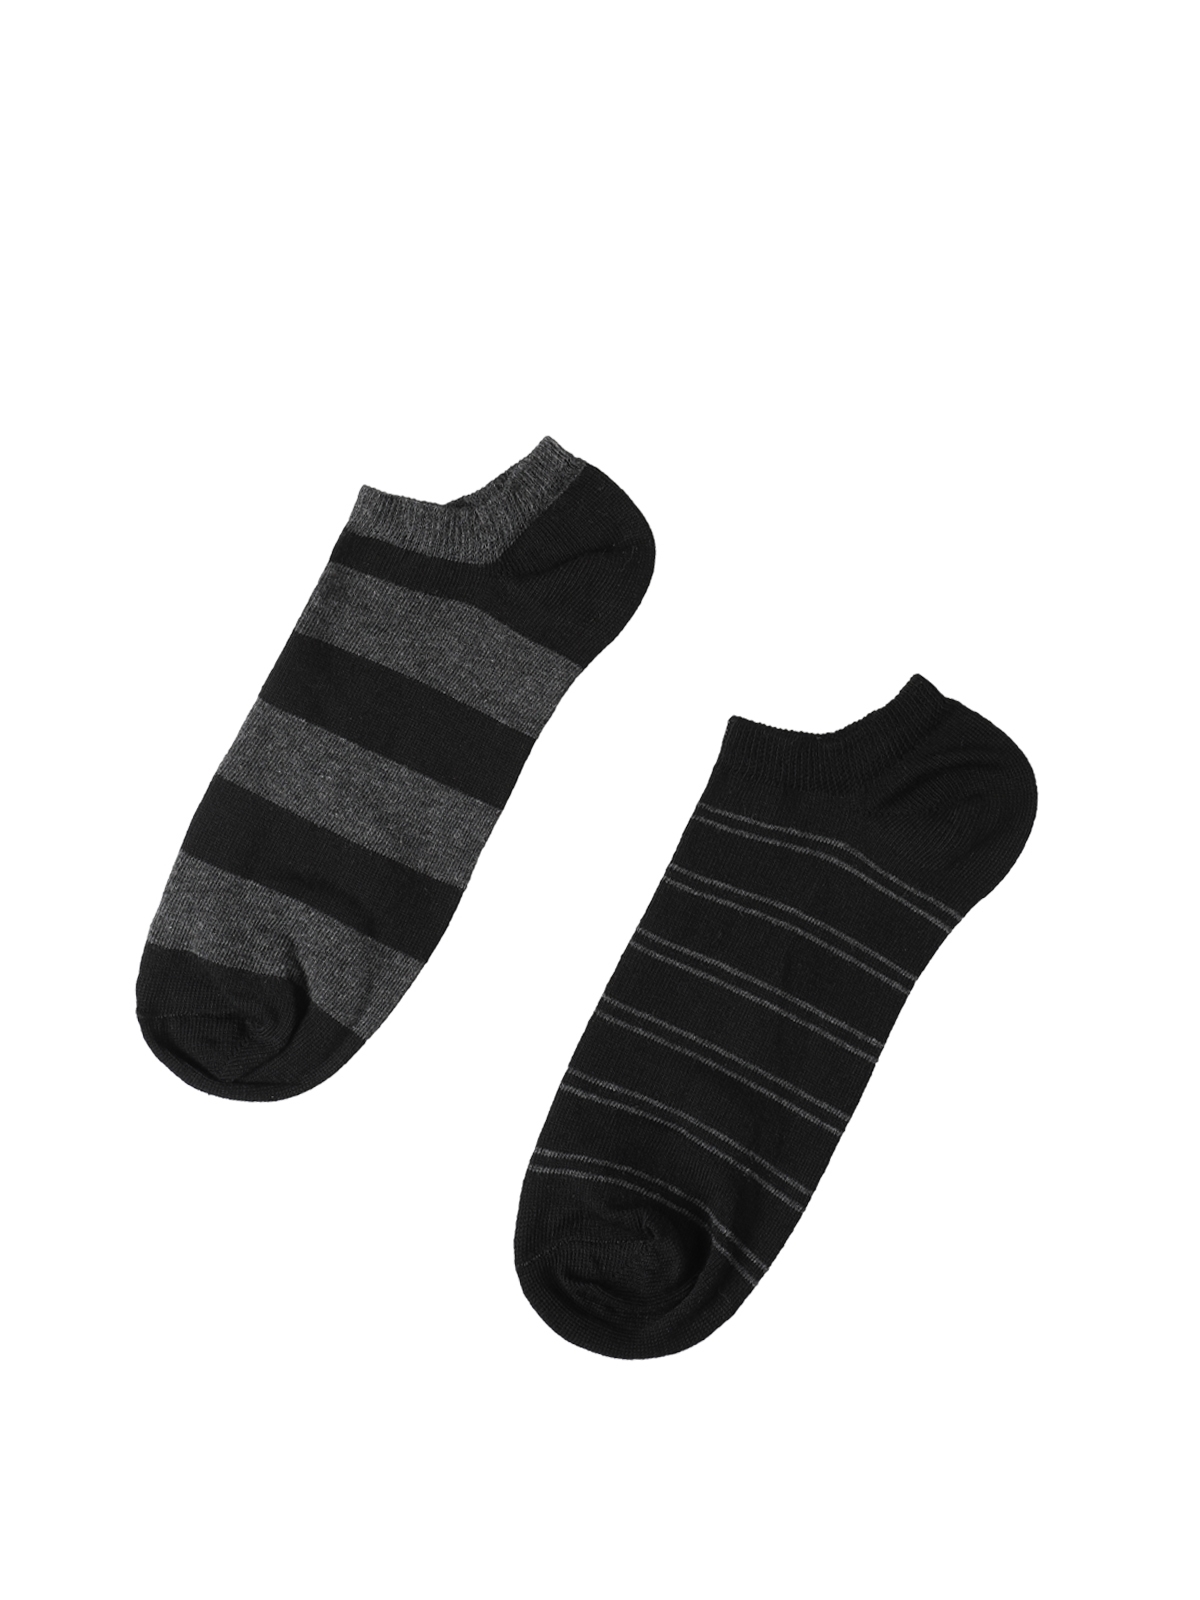 Colins Çizgili Siyah Erkek Çorap. 1